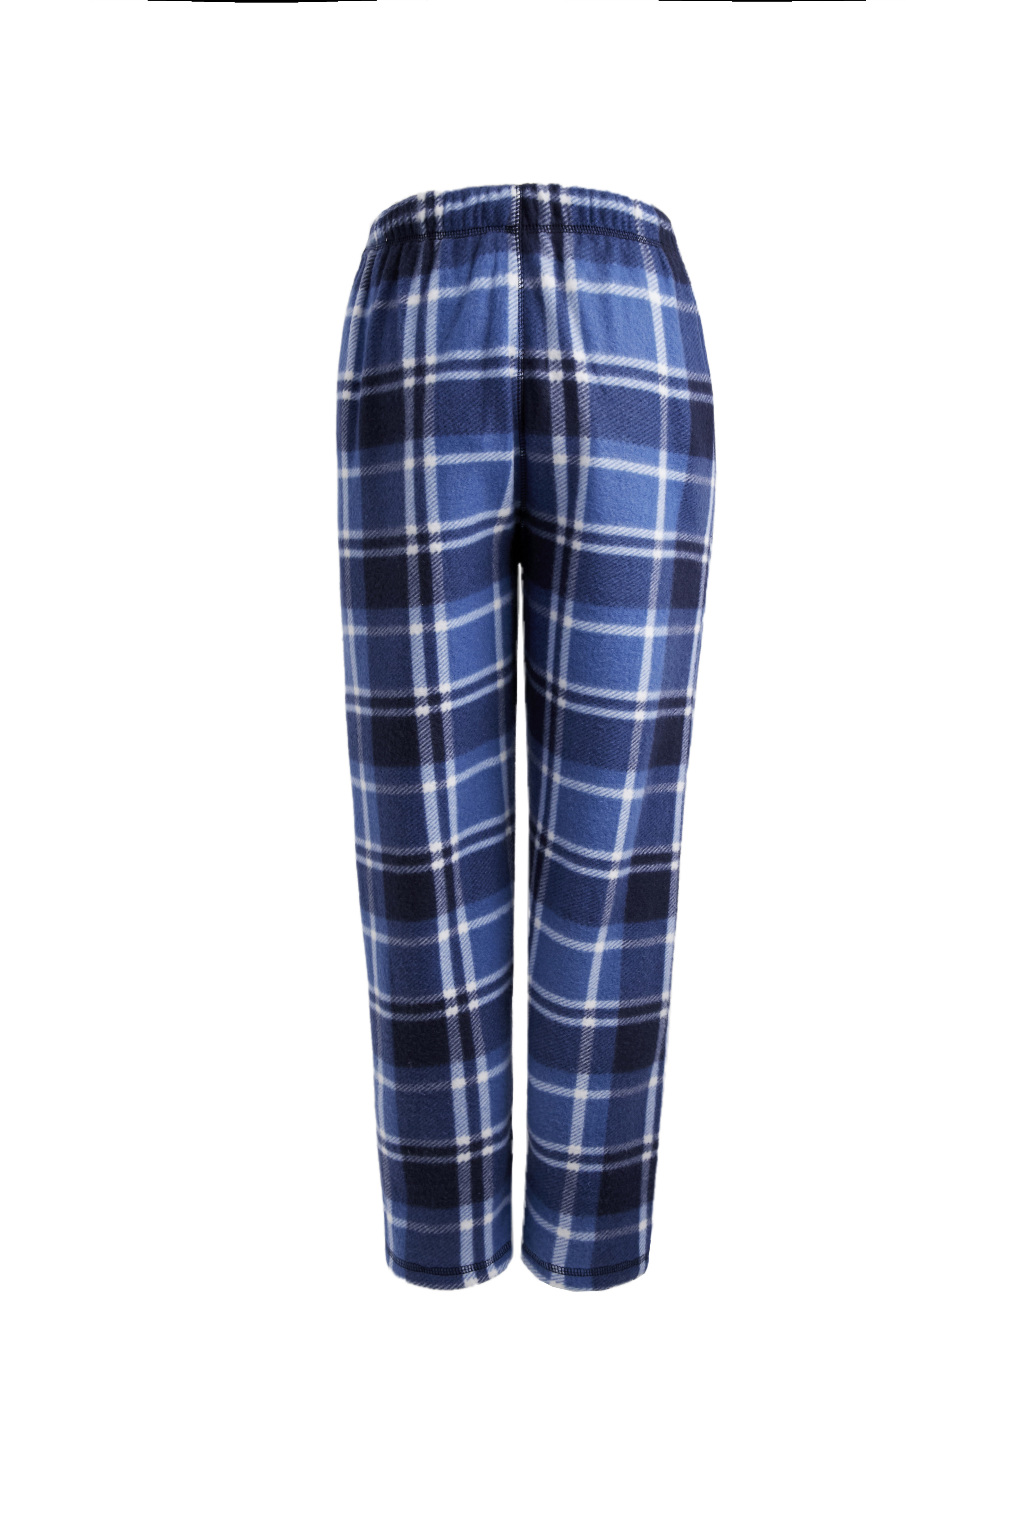 Printed Flannel Pajama Pants for Men 100 Soft Cotton L Black Buffalo Plaid   eBay